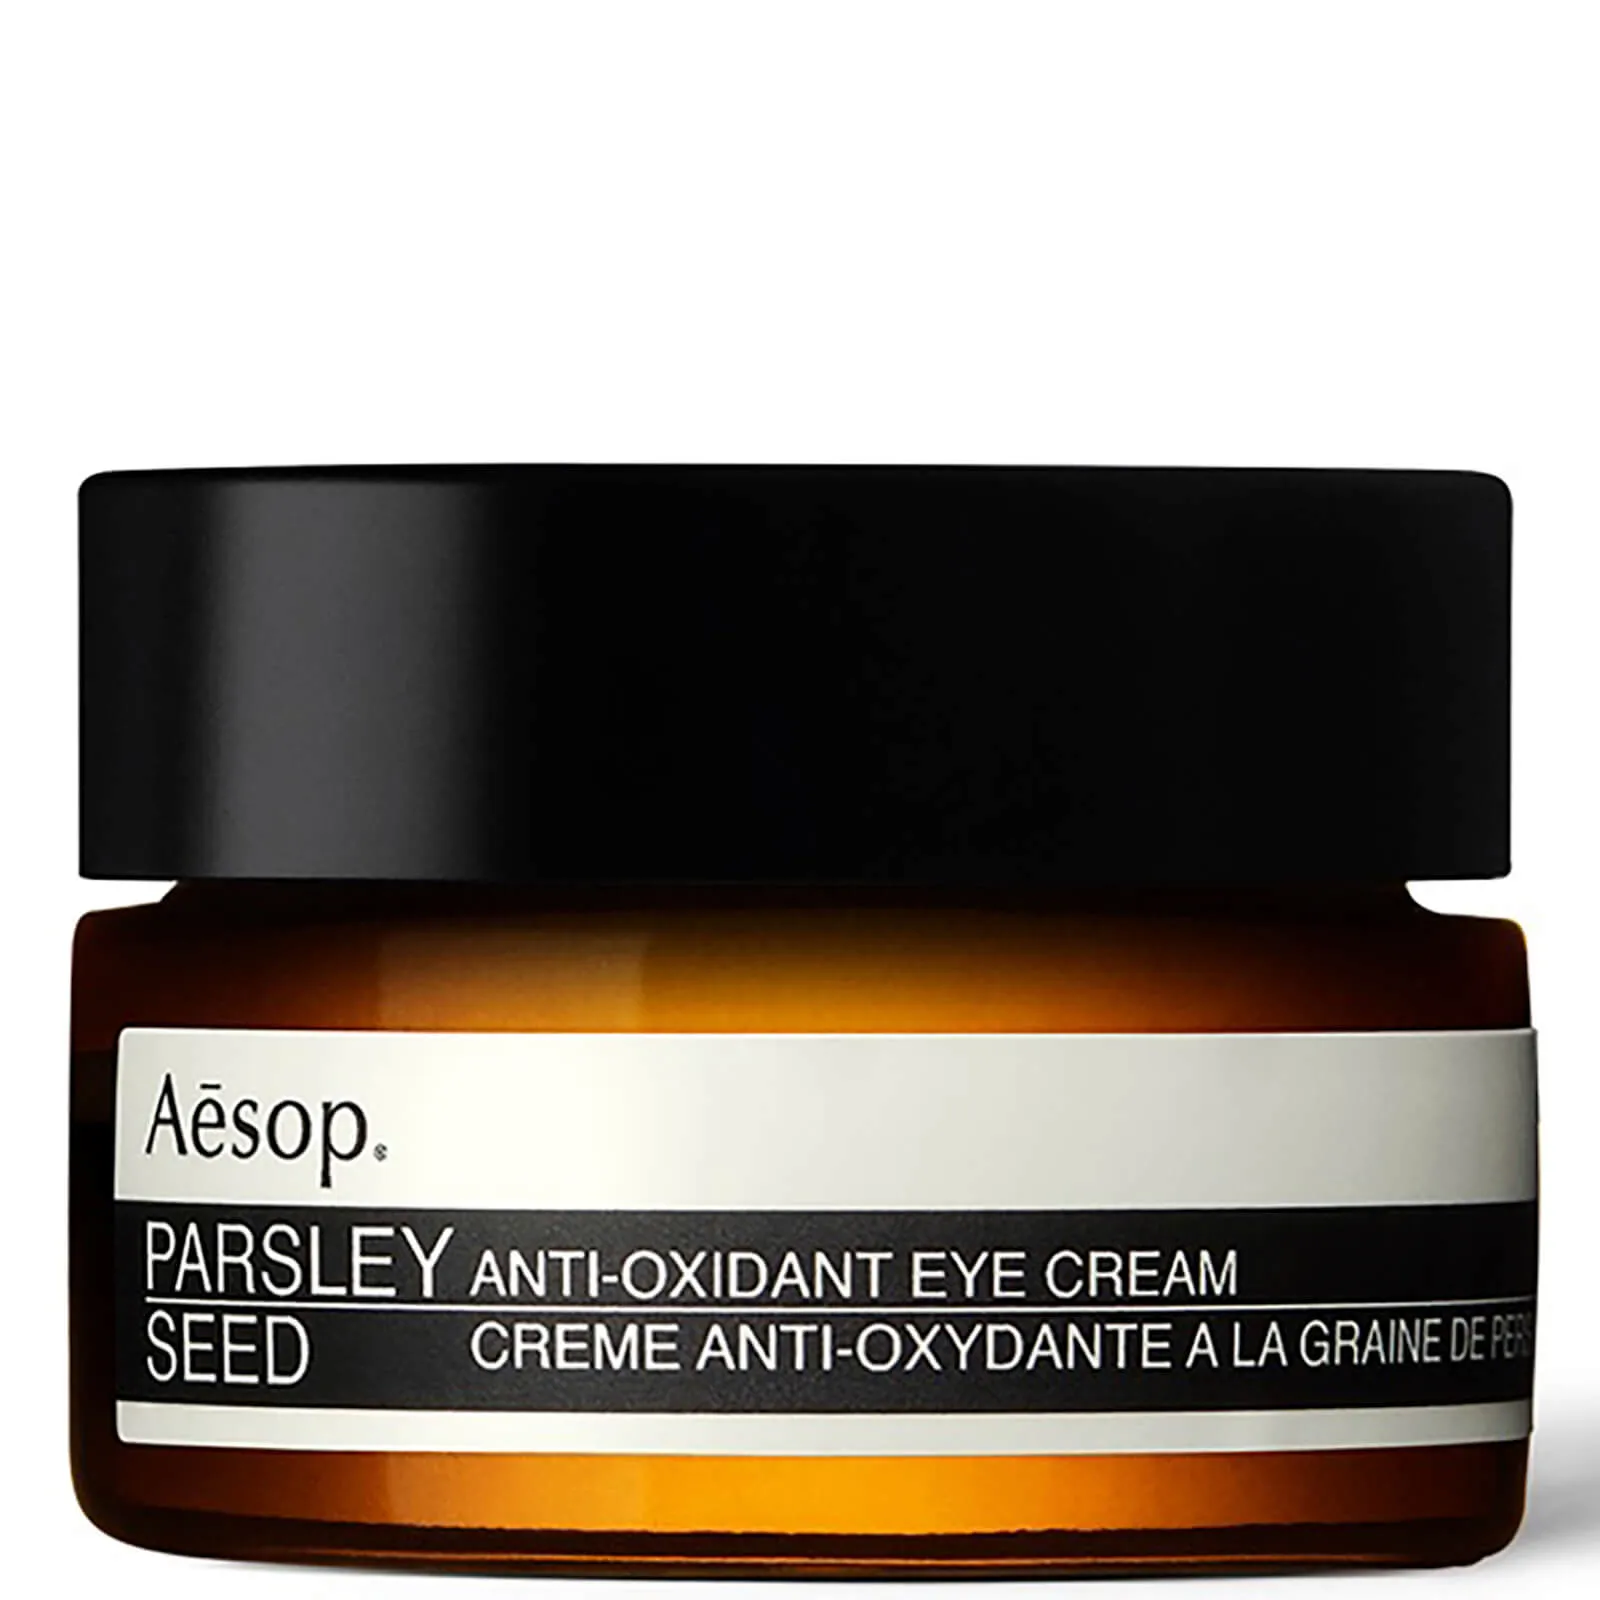  Parsley Seed Anti-Oxidant Eye Cream 10ml